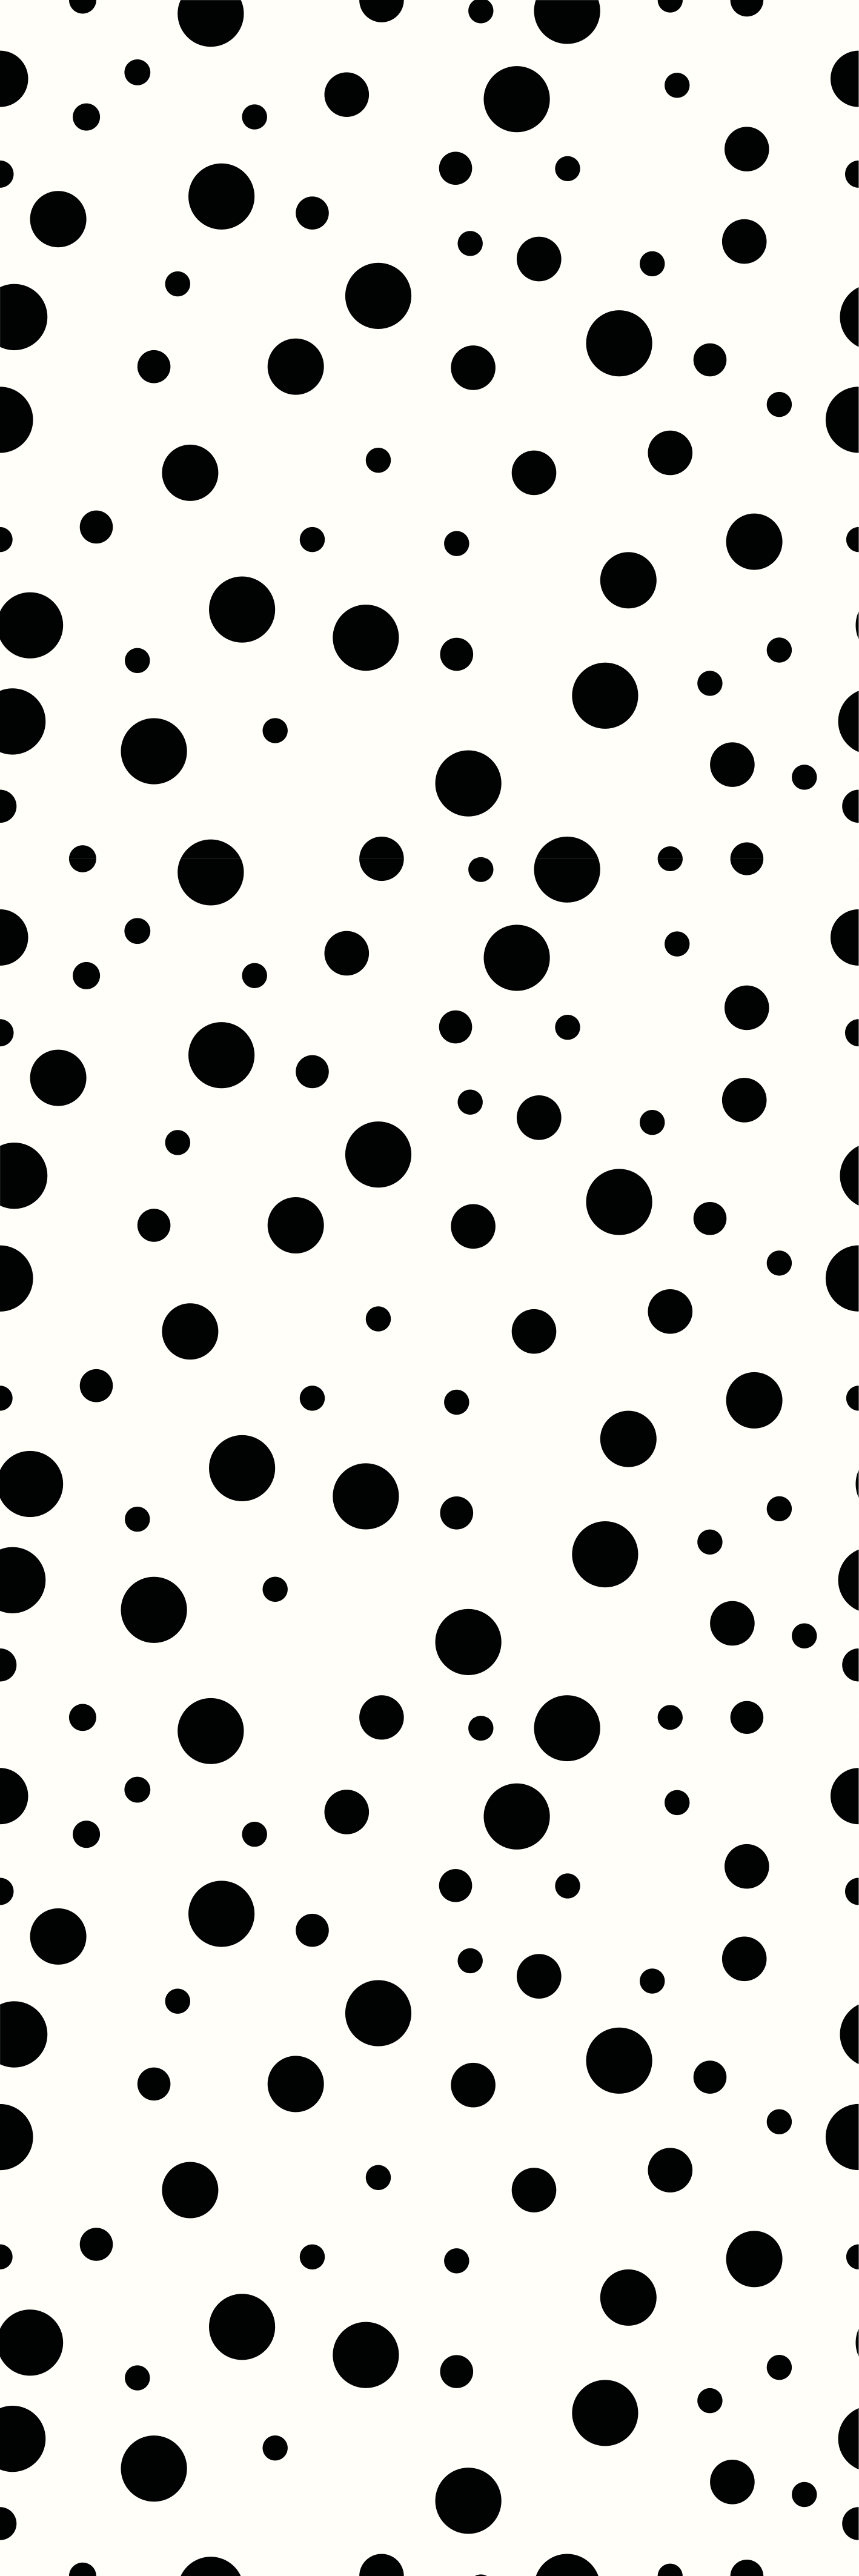 Black and White Polka Dot Dalmatian Wallpaper Mural  Etsy